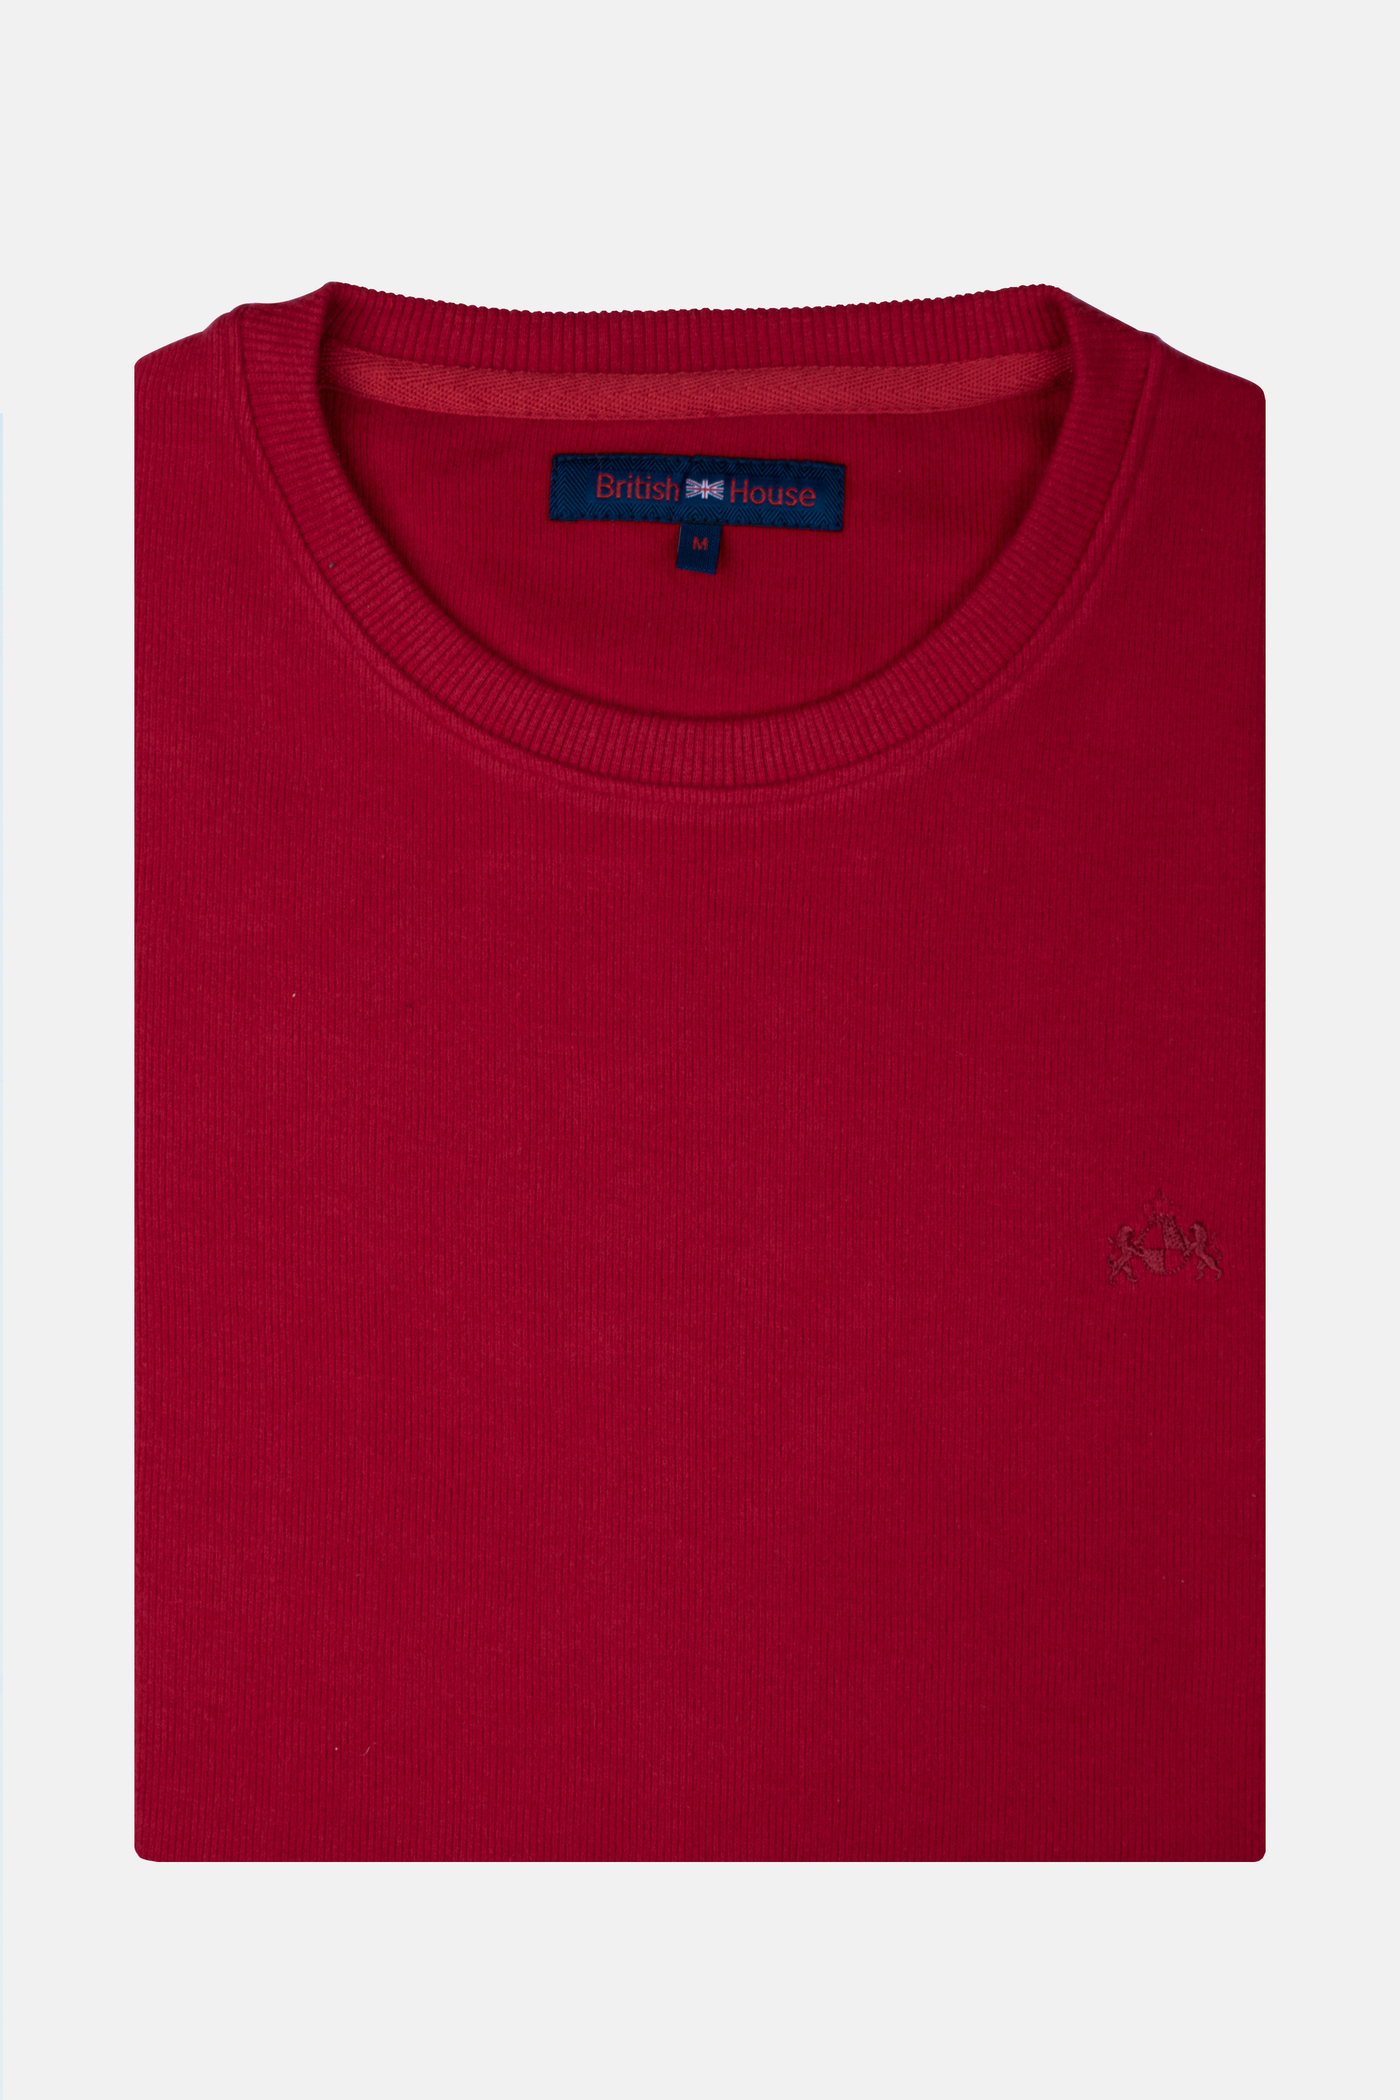 Cardinal Red Cotton Sweatshirt